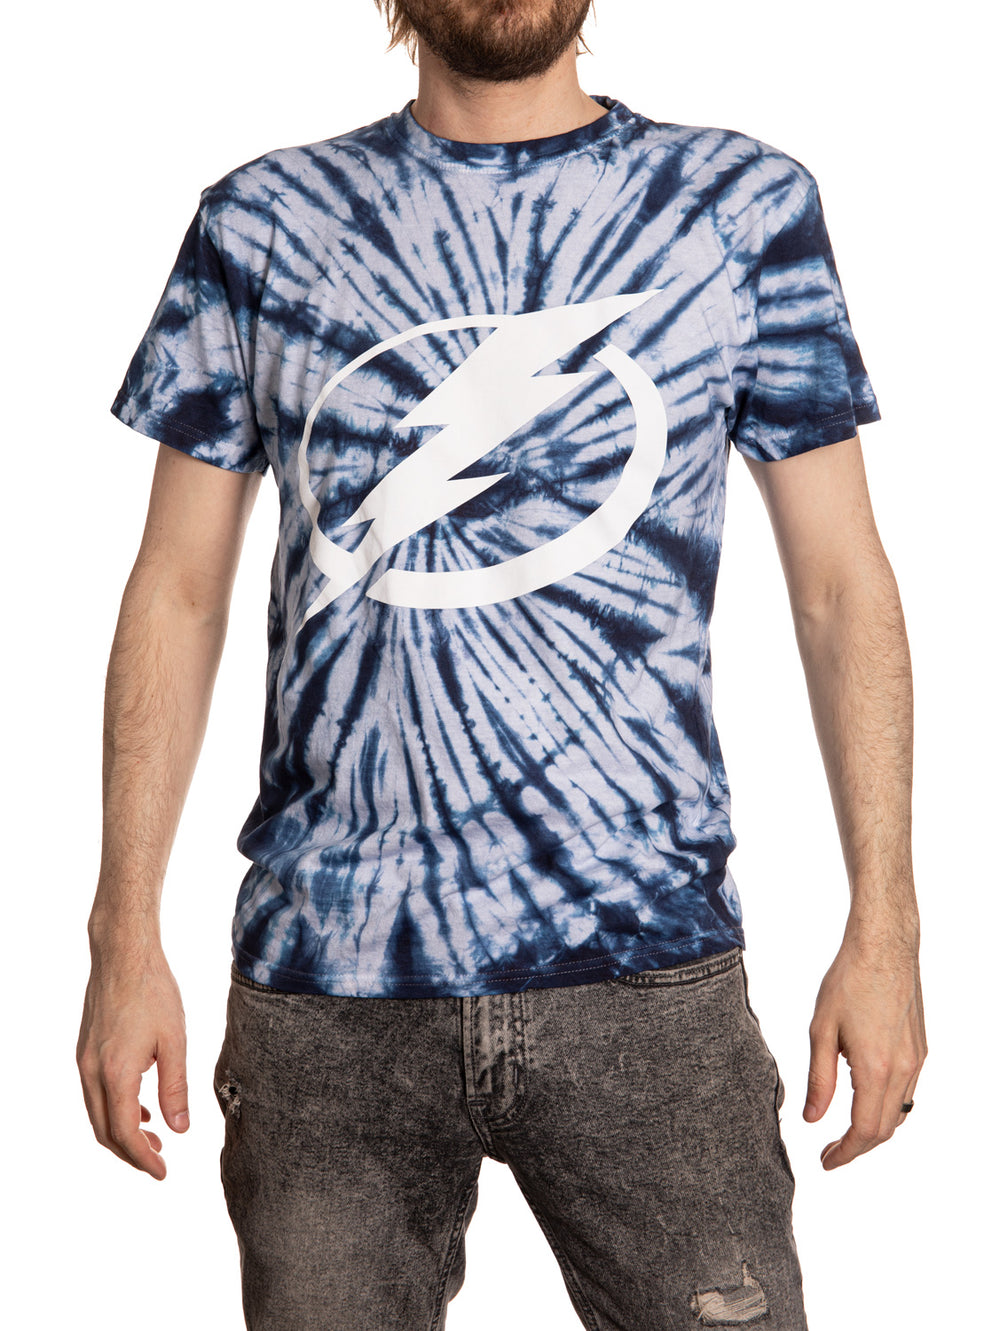 Tampa Bay Lightning Blue Spiral Tie Dye T-Shirt Front View